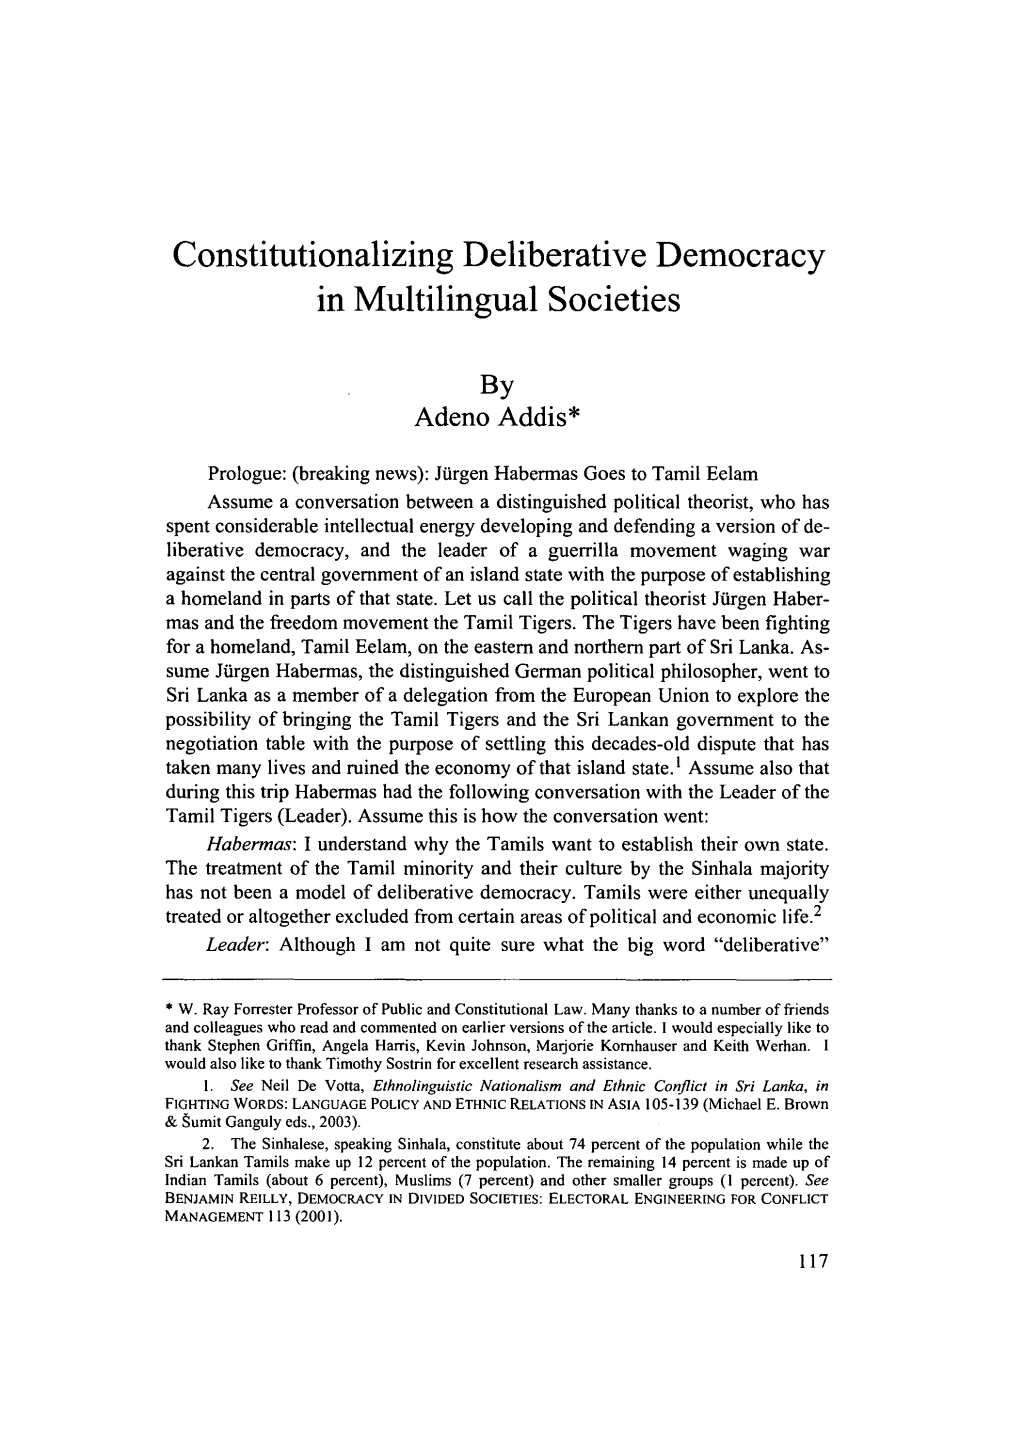 Constitutionalizing Deliberative Democracy in Multilingual Societies